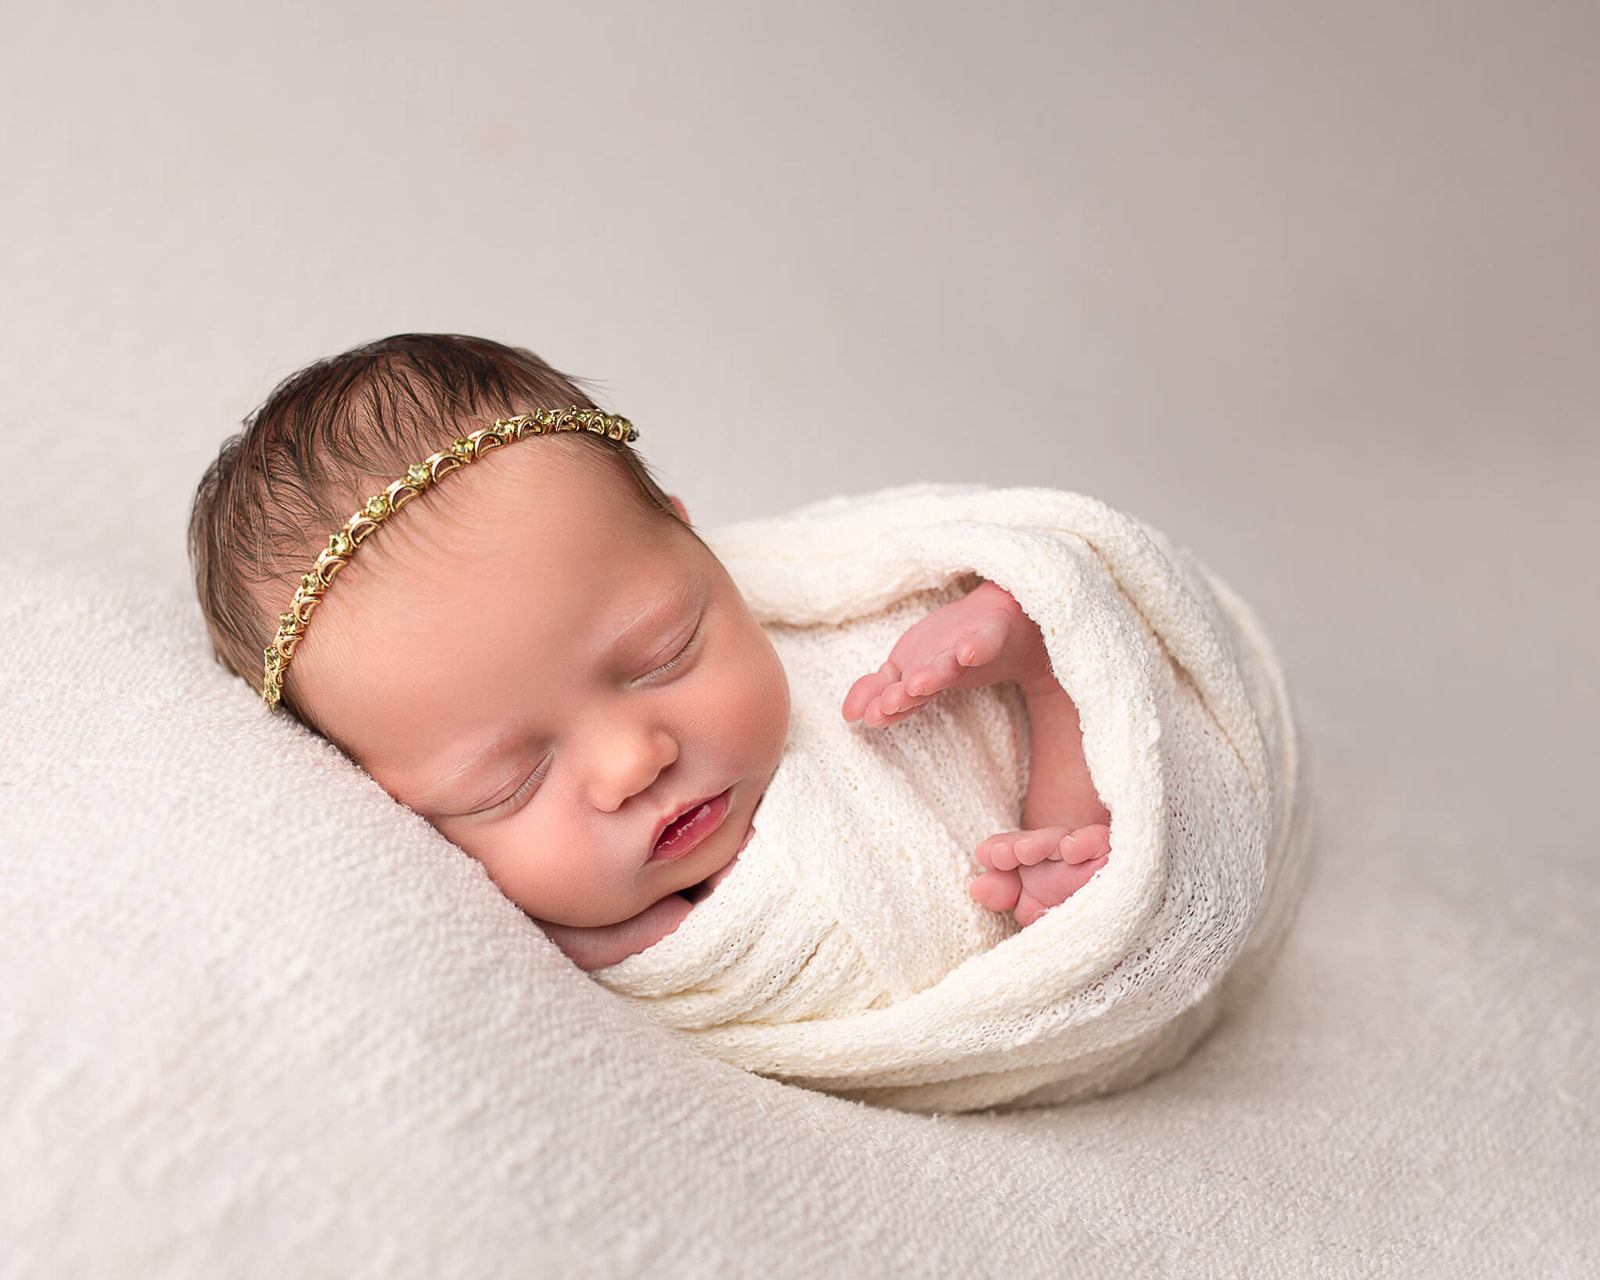 sleeping newborn during newborn photography session. Let's discuss newborn care tips!